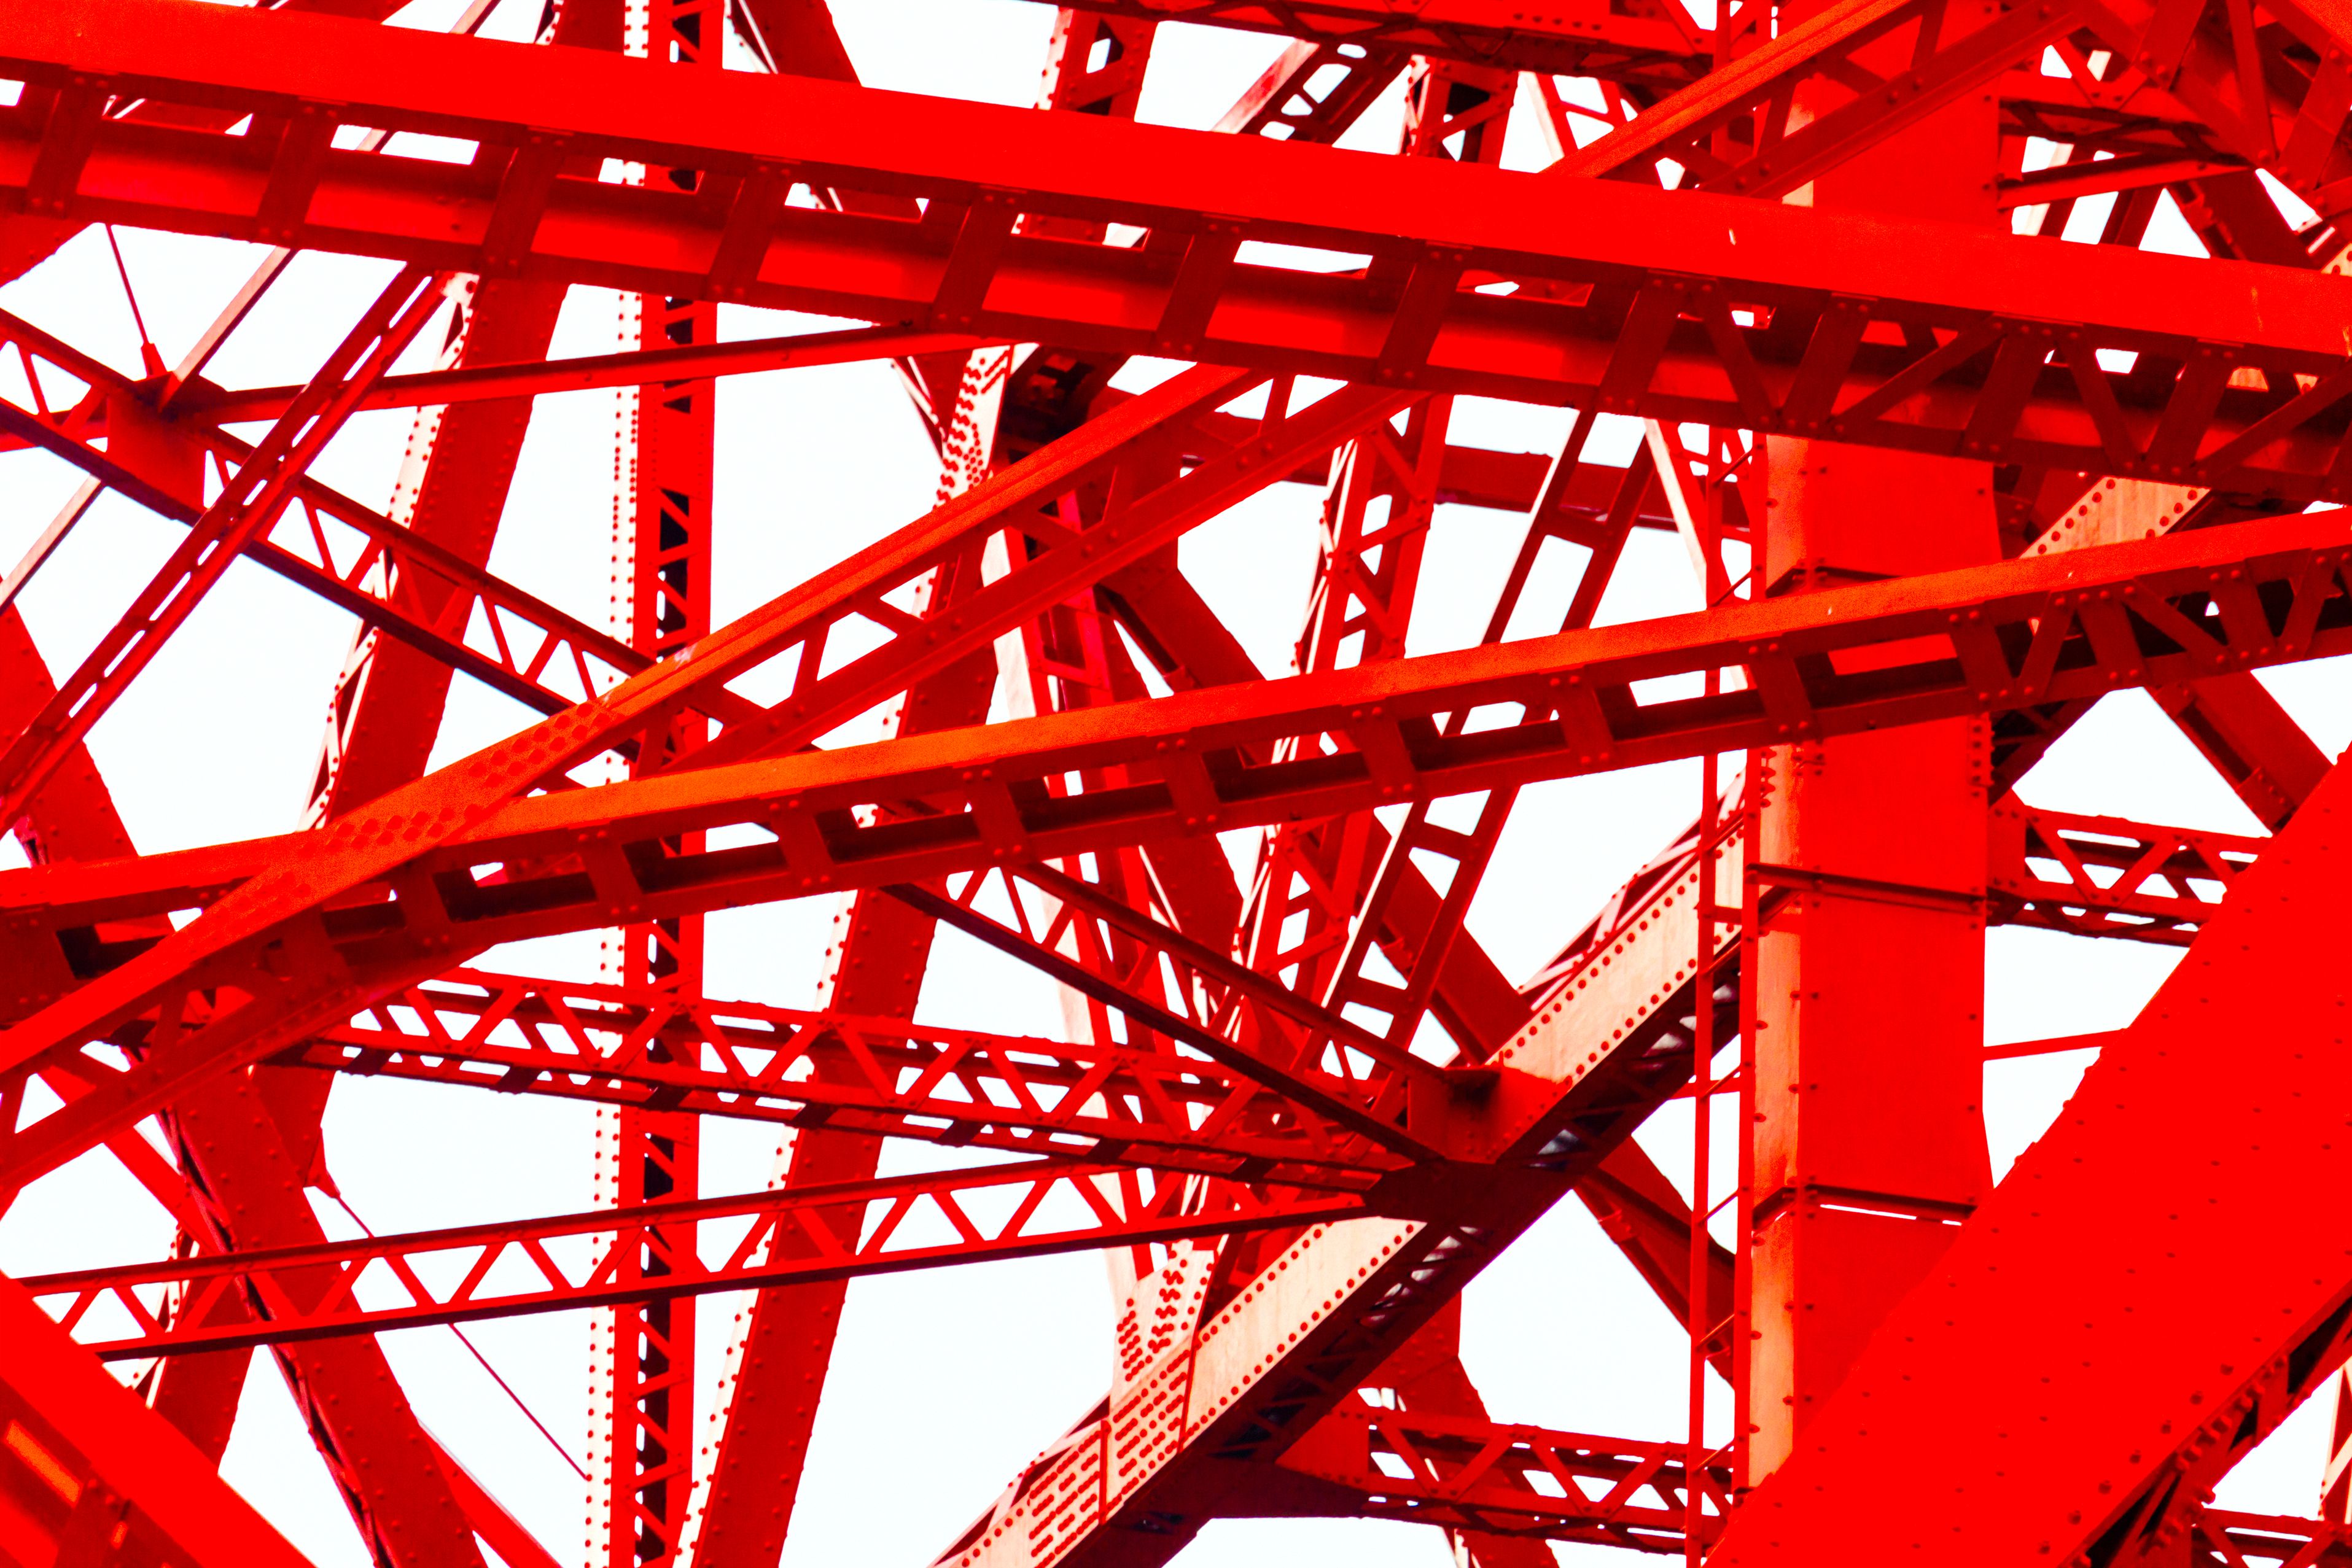 Tokyo Tower Neon Genesis Evangelion Red Steel Wallpaper:3830x2554